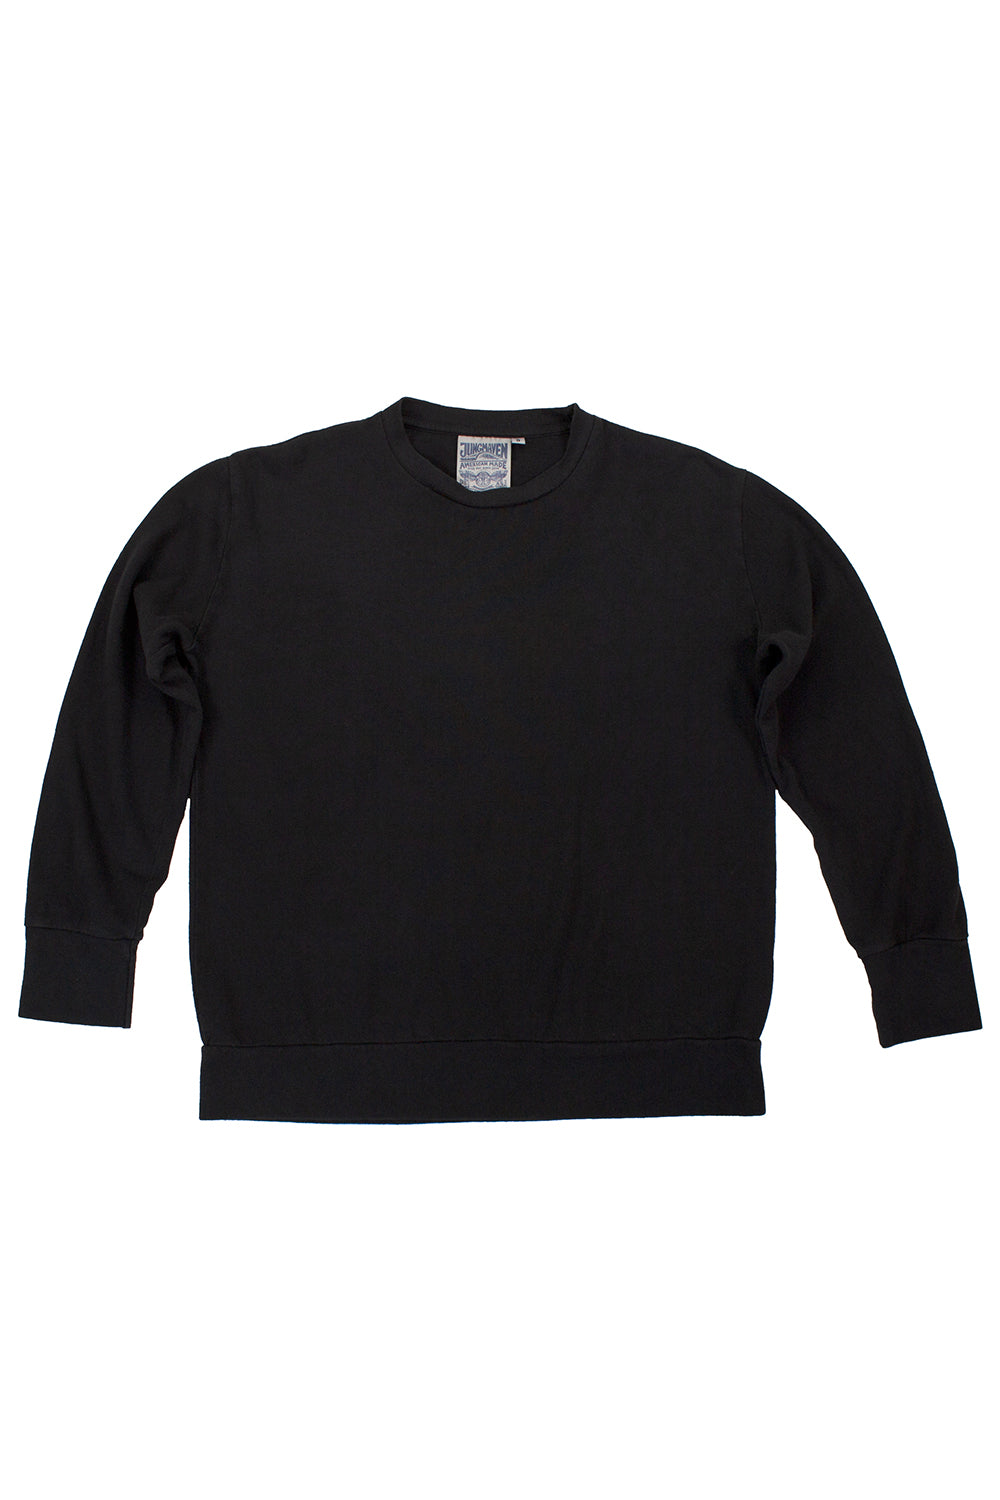 California Pullover | Jungmaven Hemp Clothing & Accessories / Color: Black